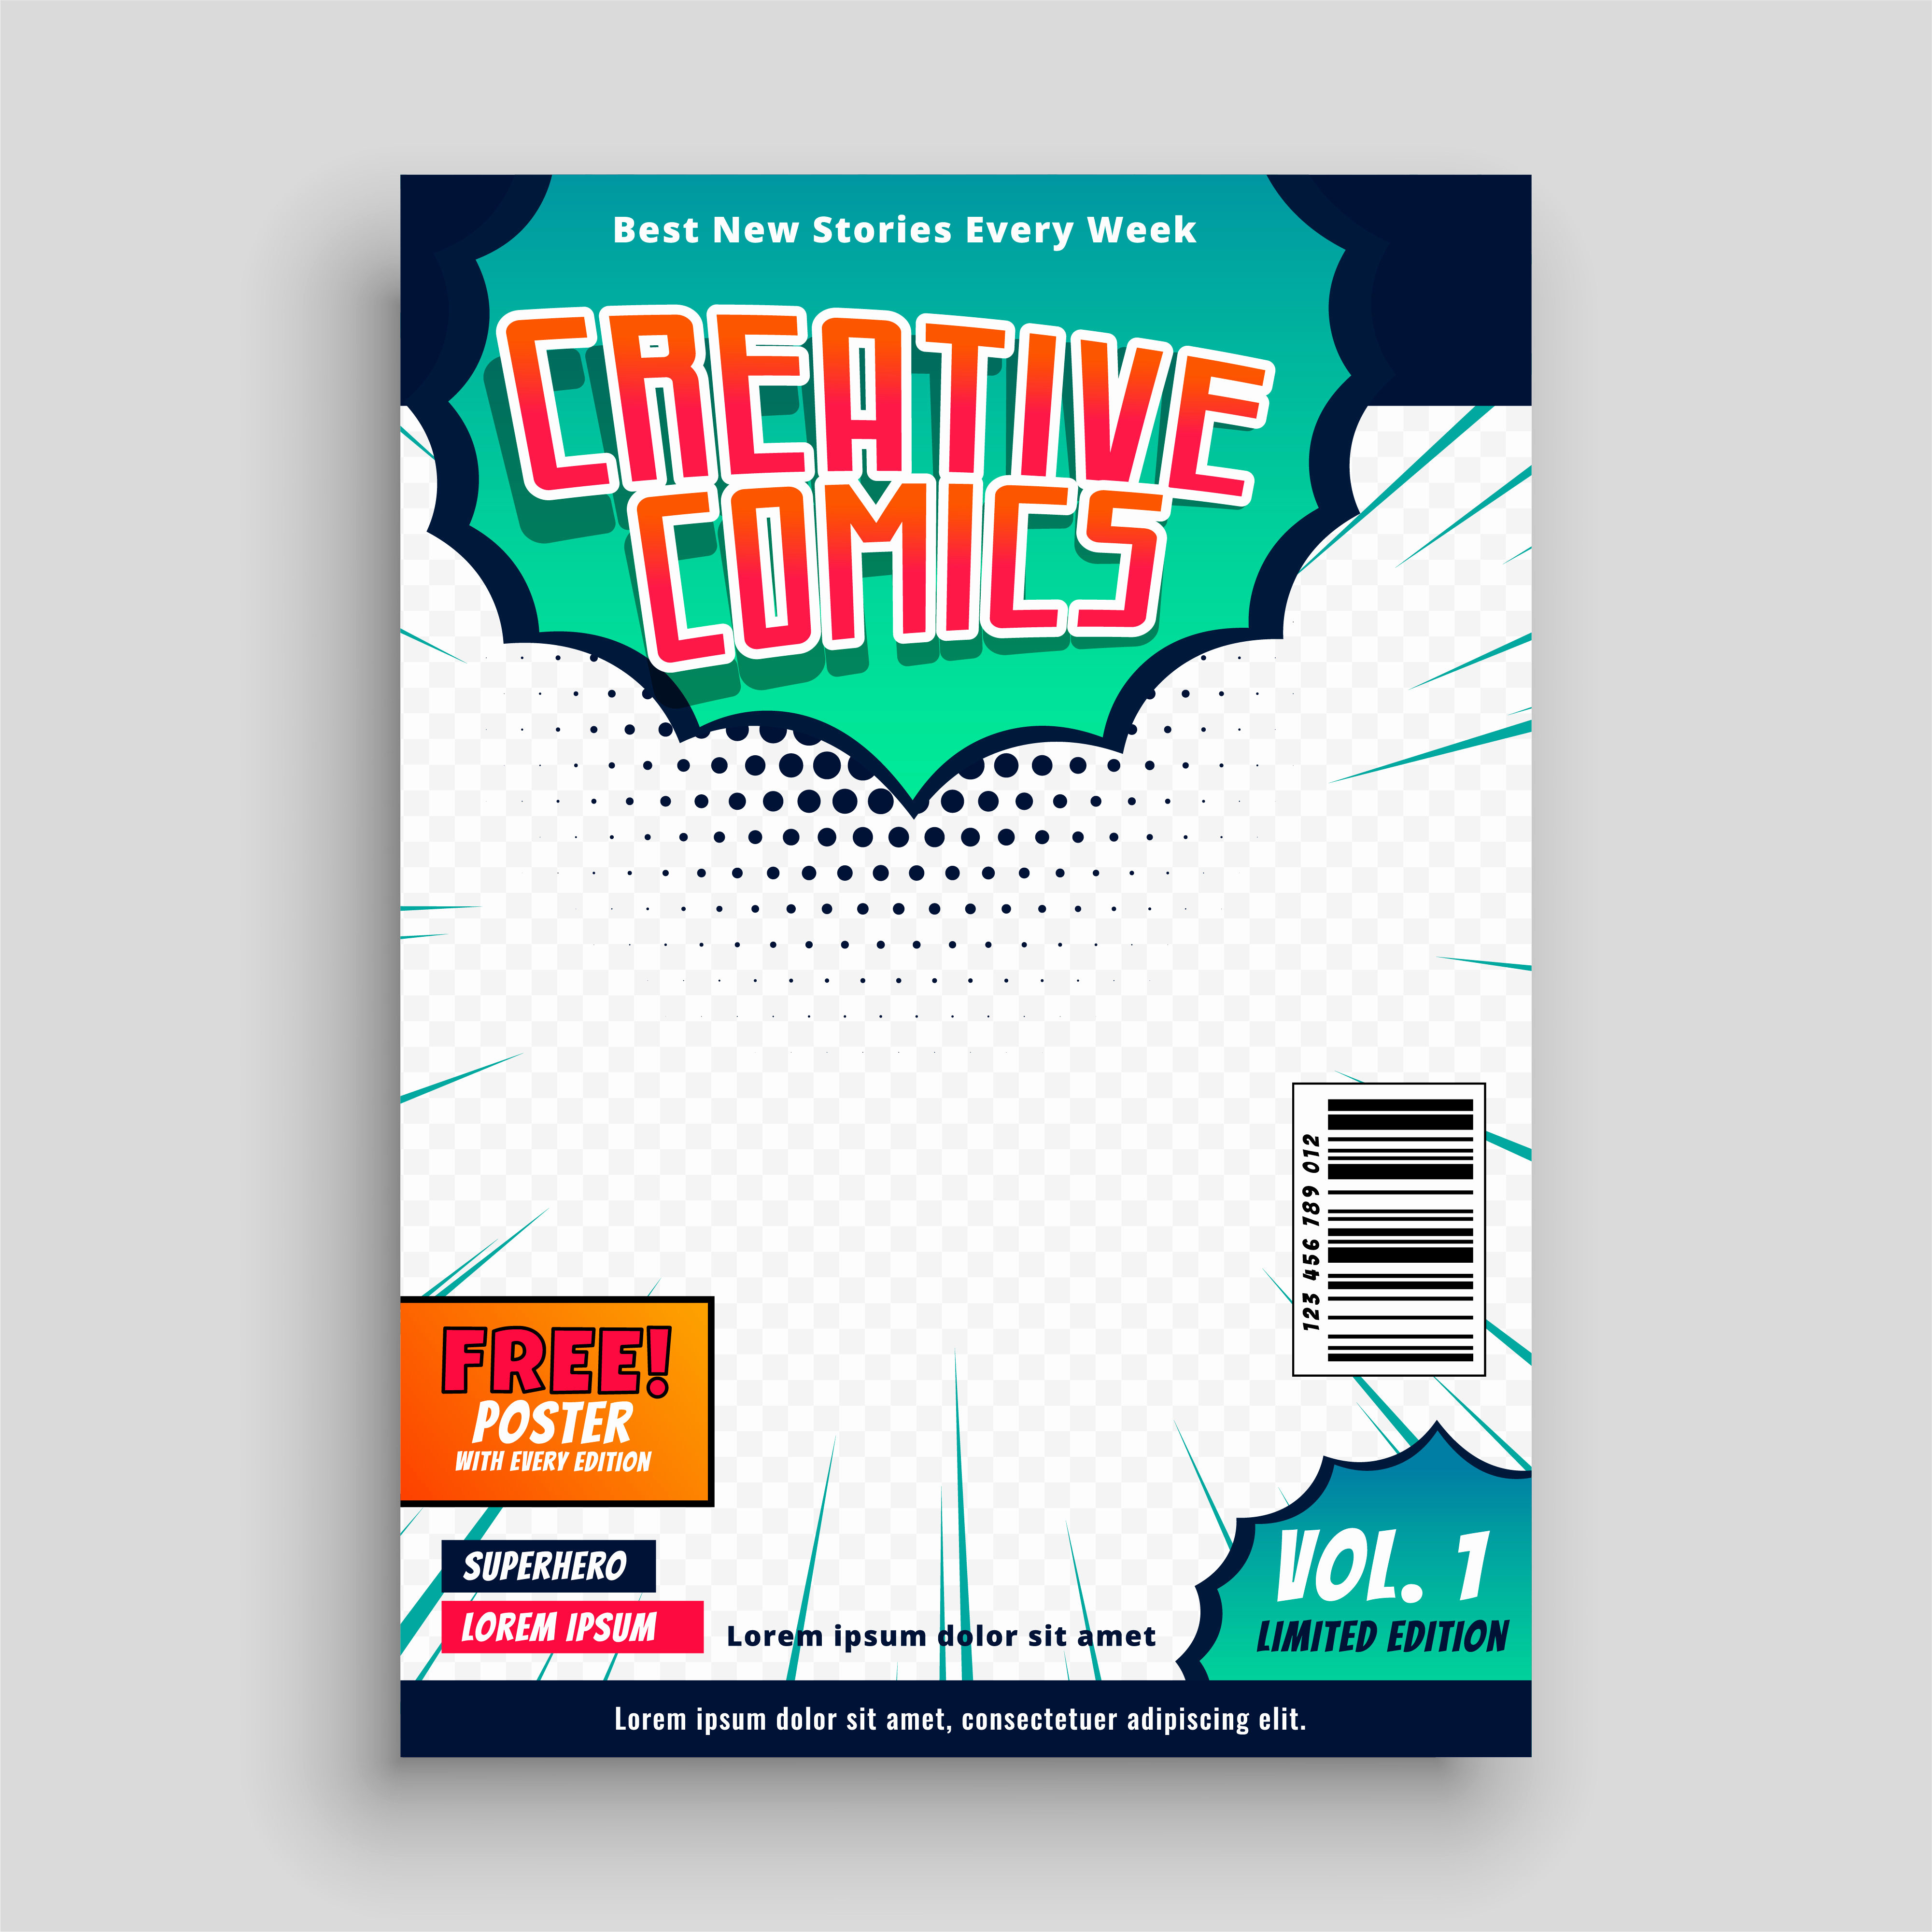 Book Cover Design Template Luxury Book Cover Design 7350 Free Downloads